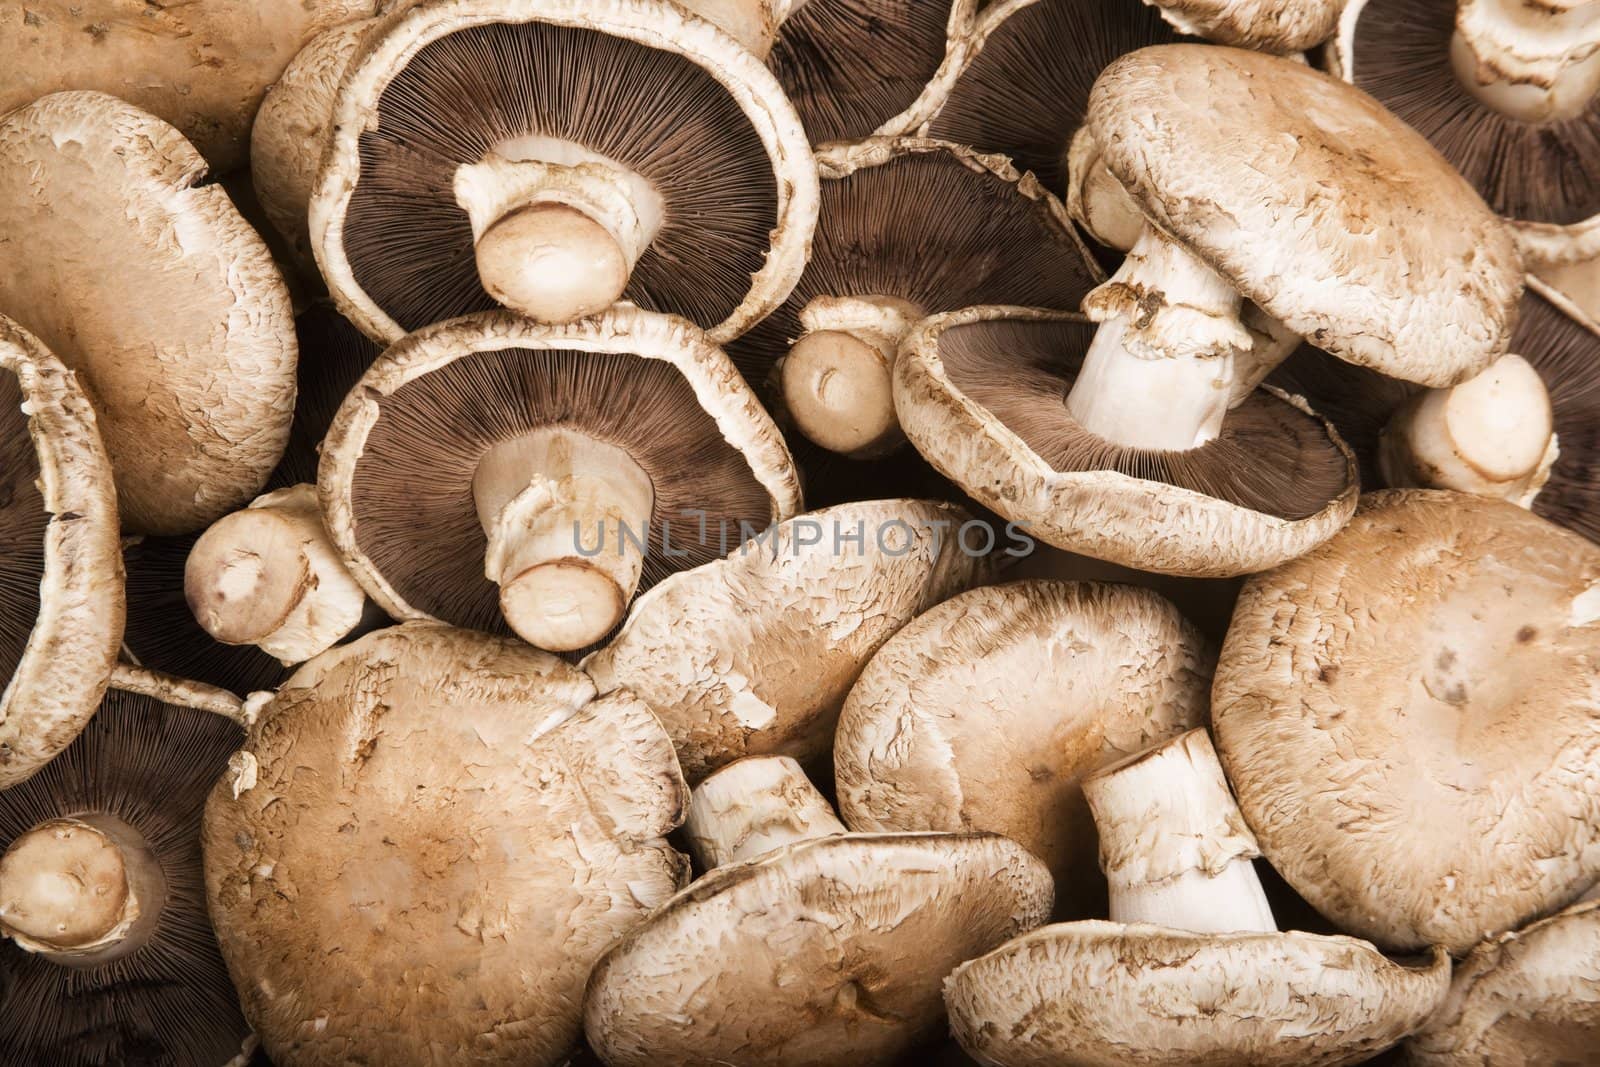 Portobello Mushrooms in a pile filling the frame